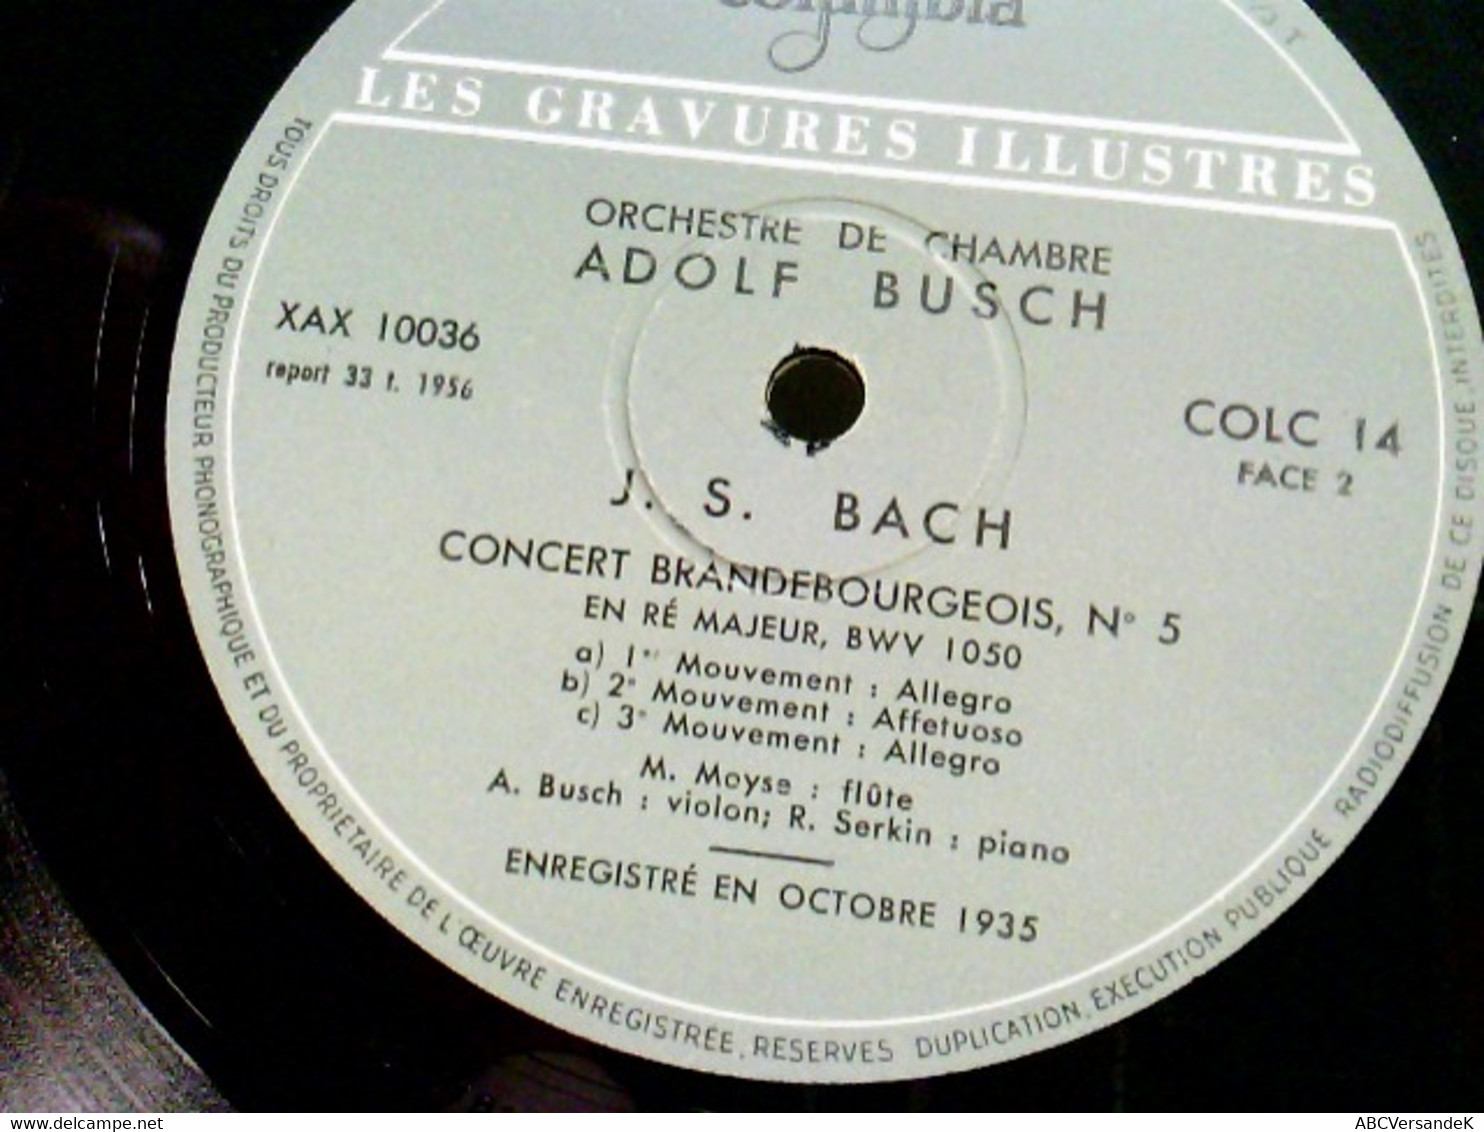 Orchestre De Chambre*, Adolf Busch  Concerts Brandebourgeois Nos 3,4 & 5 - Sports